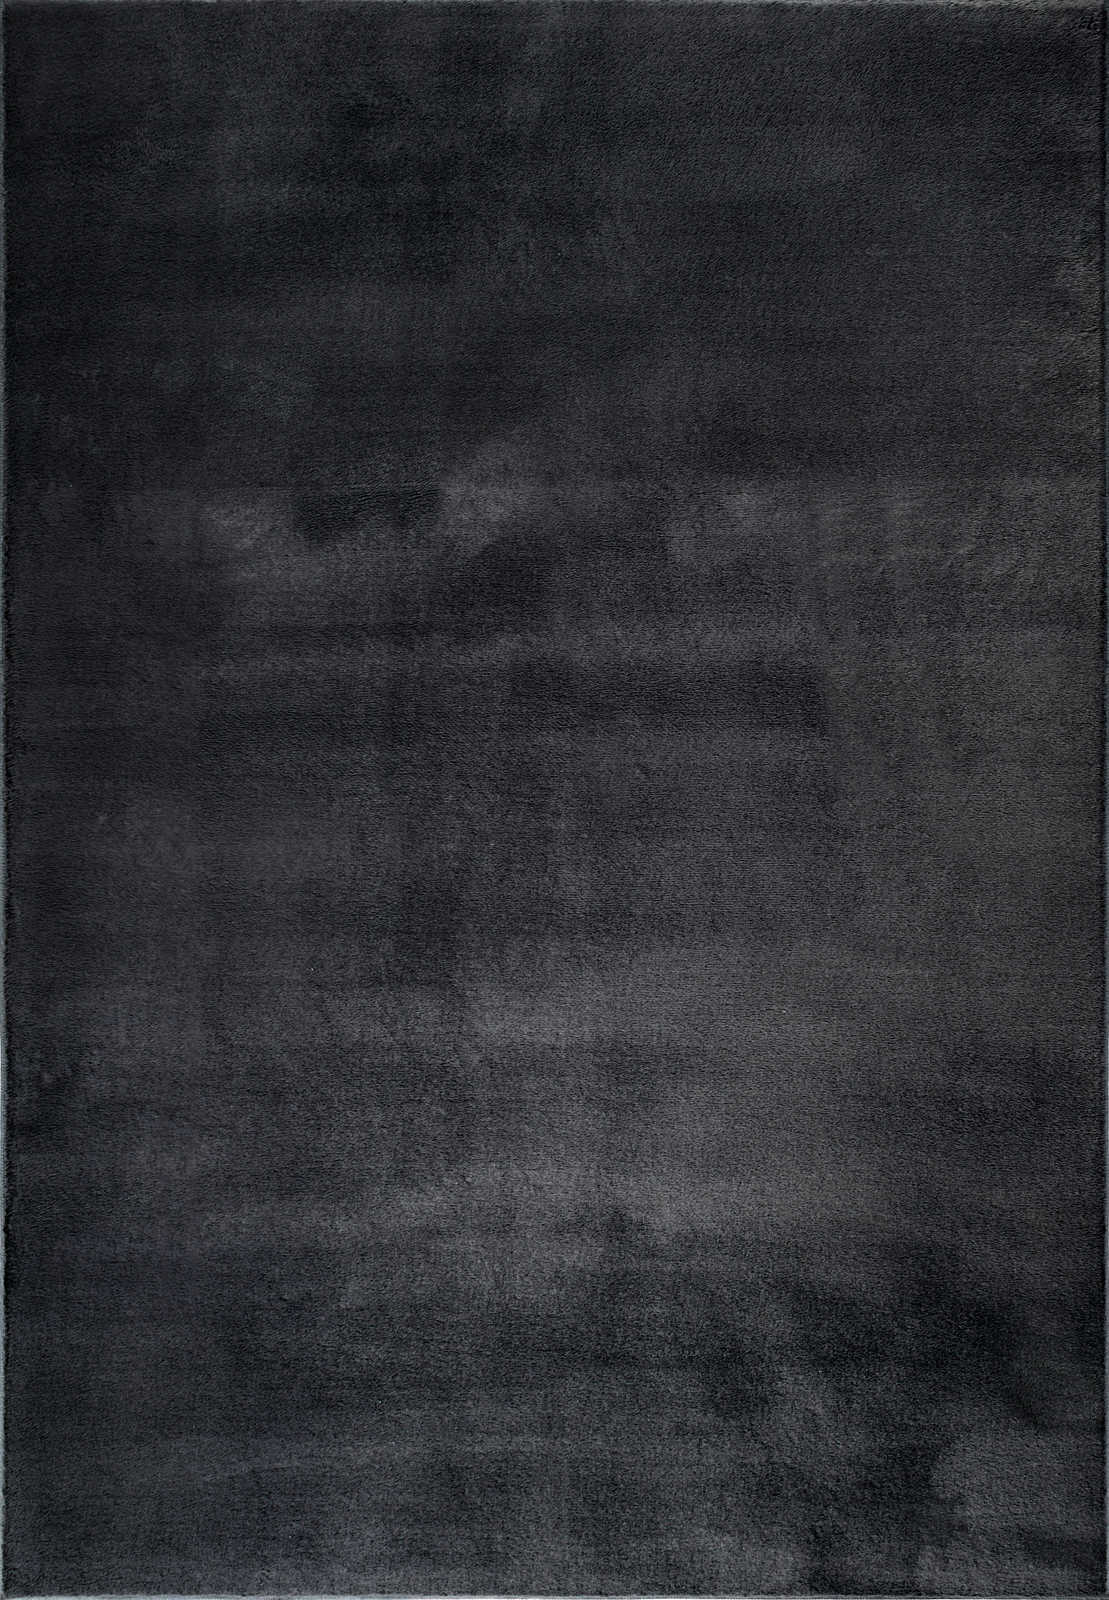             Cuddly soft high pile carpet in black - 140 x 70 cm
        